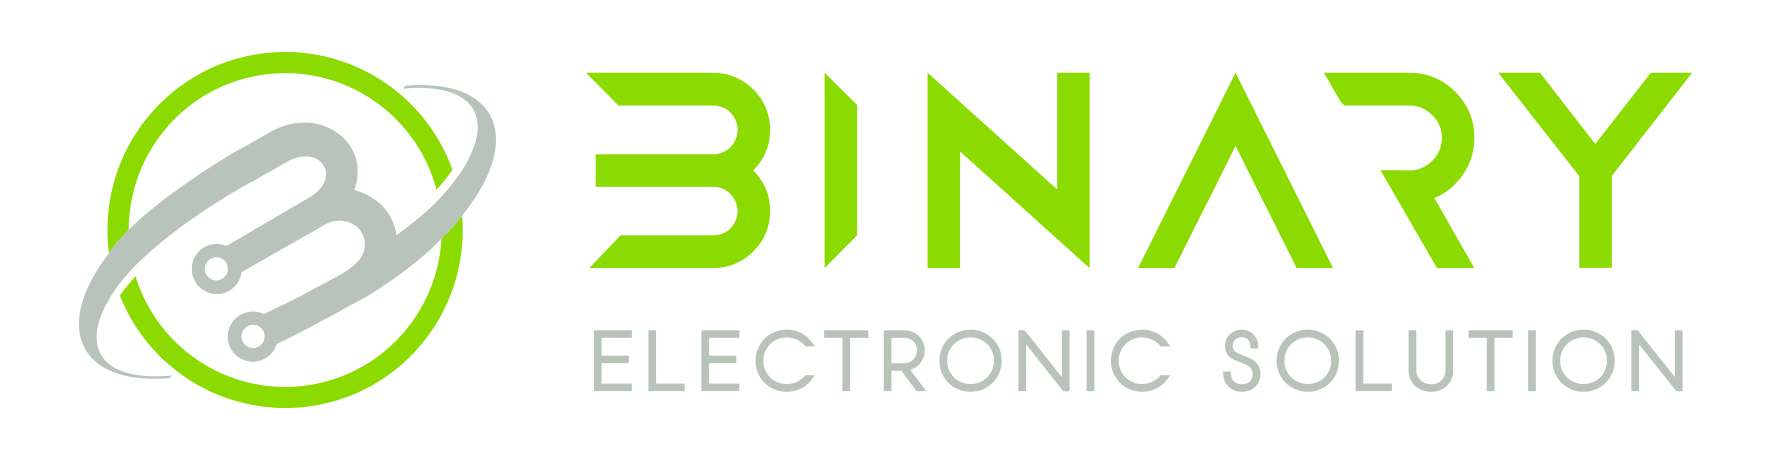 Binary electronic